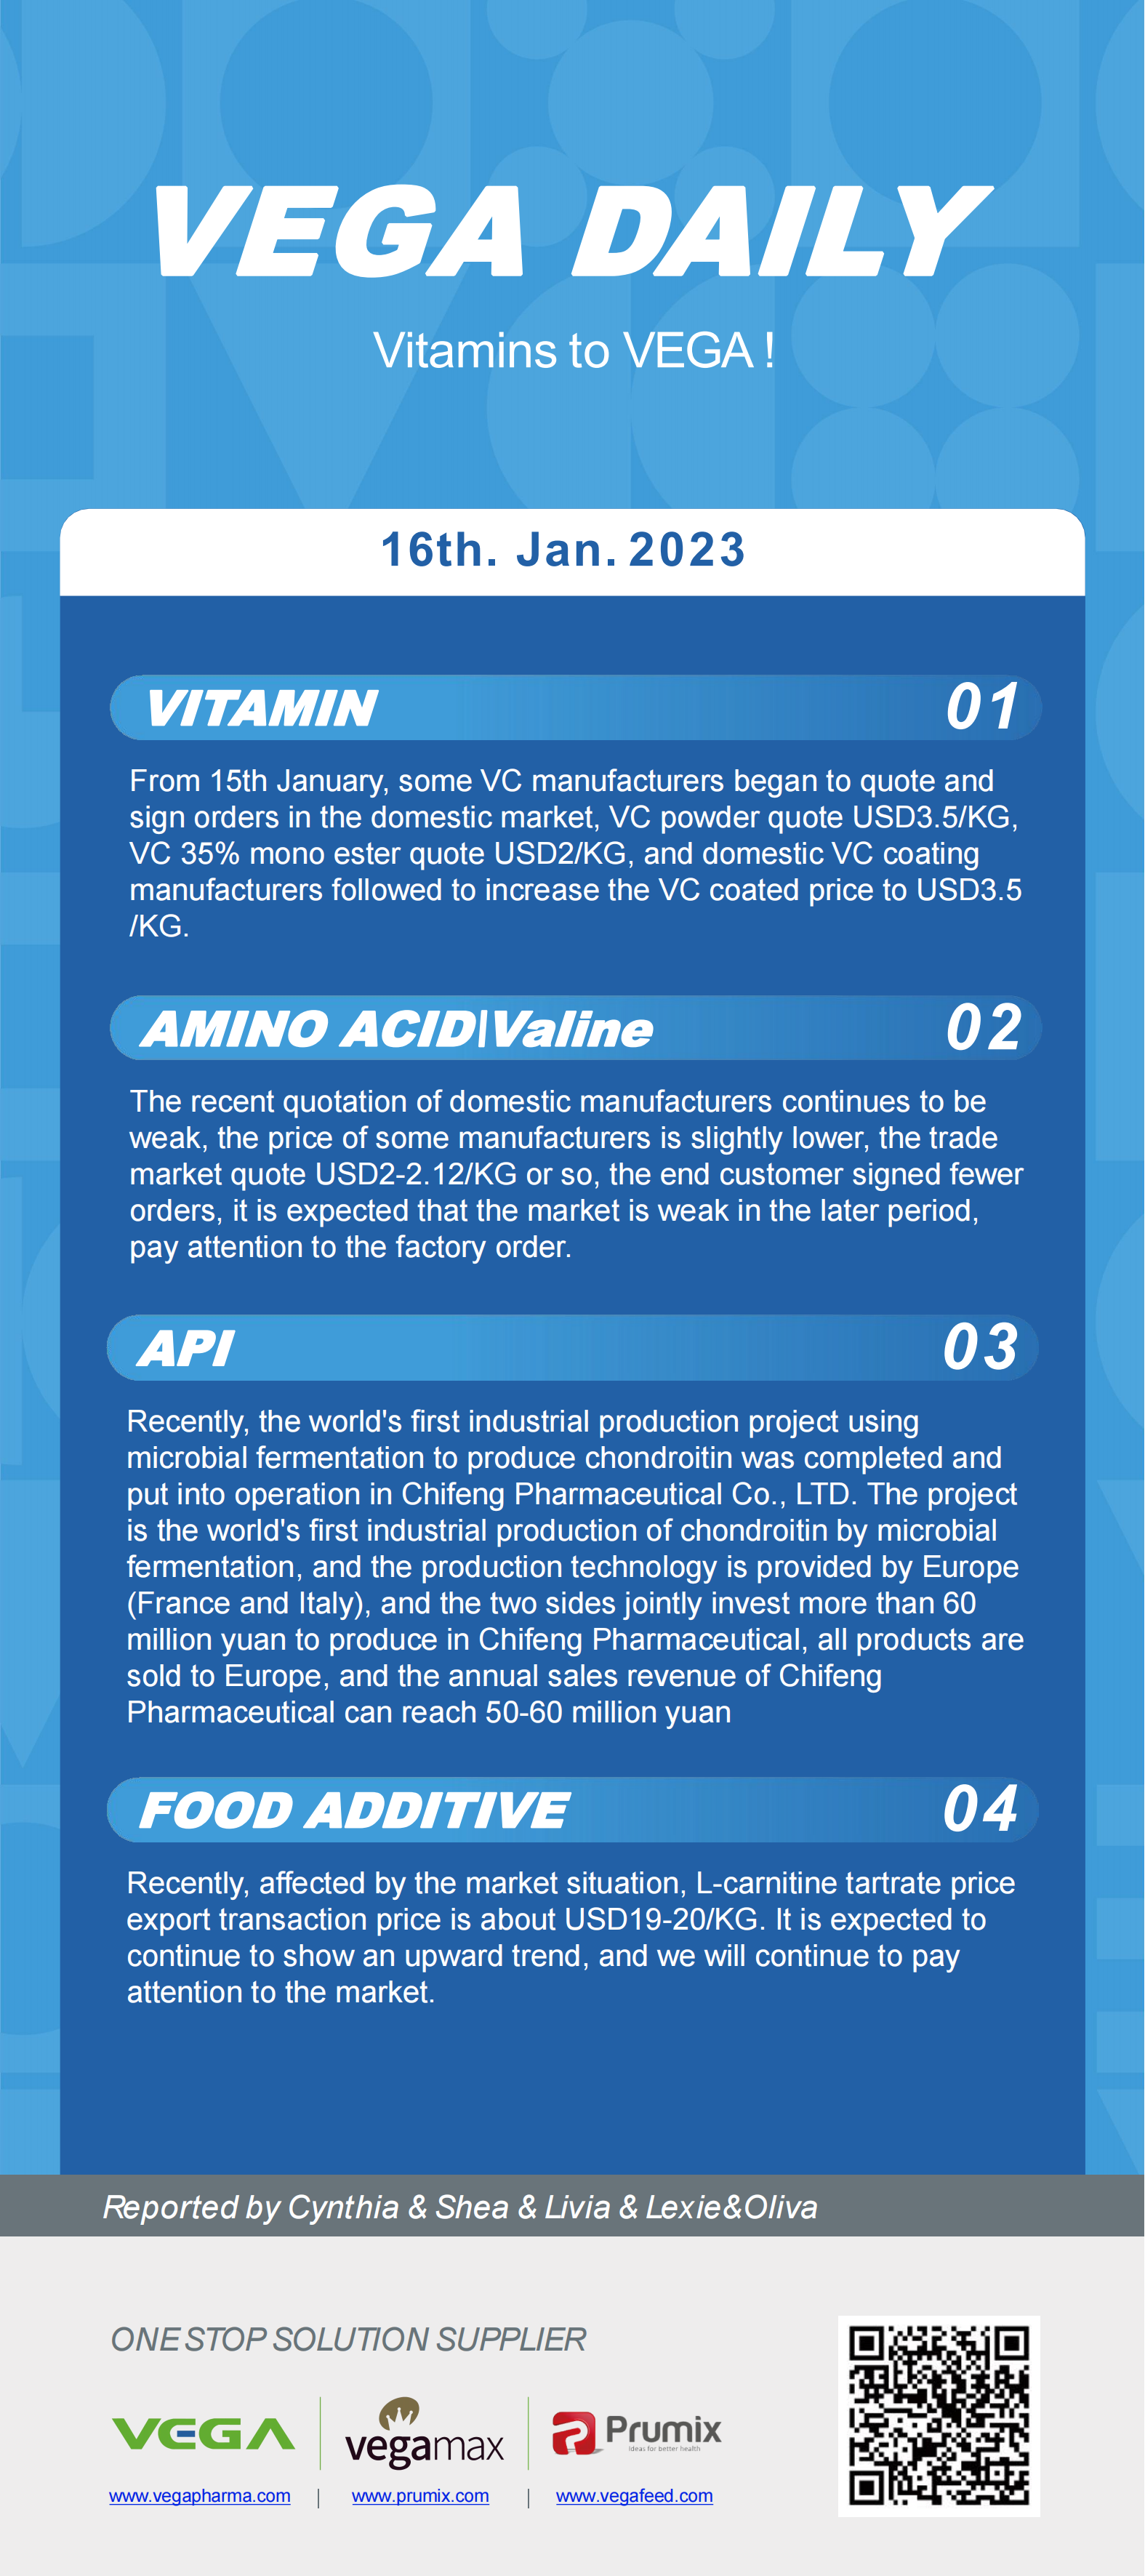 Vega Daily Dated on Jan 16th 2024 Vitamin Amino Acid APl Food Additives.png